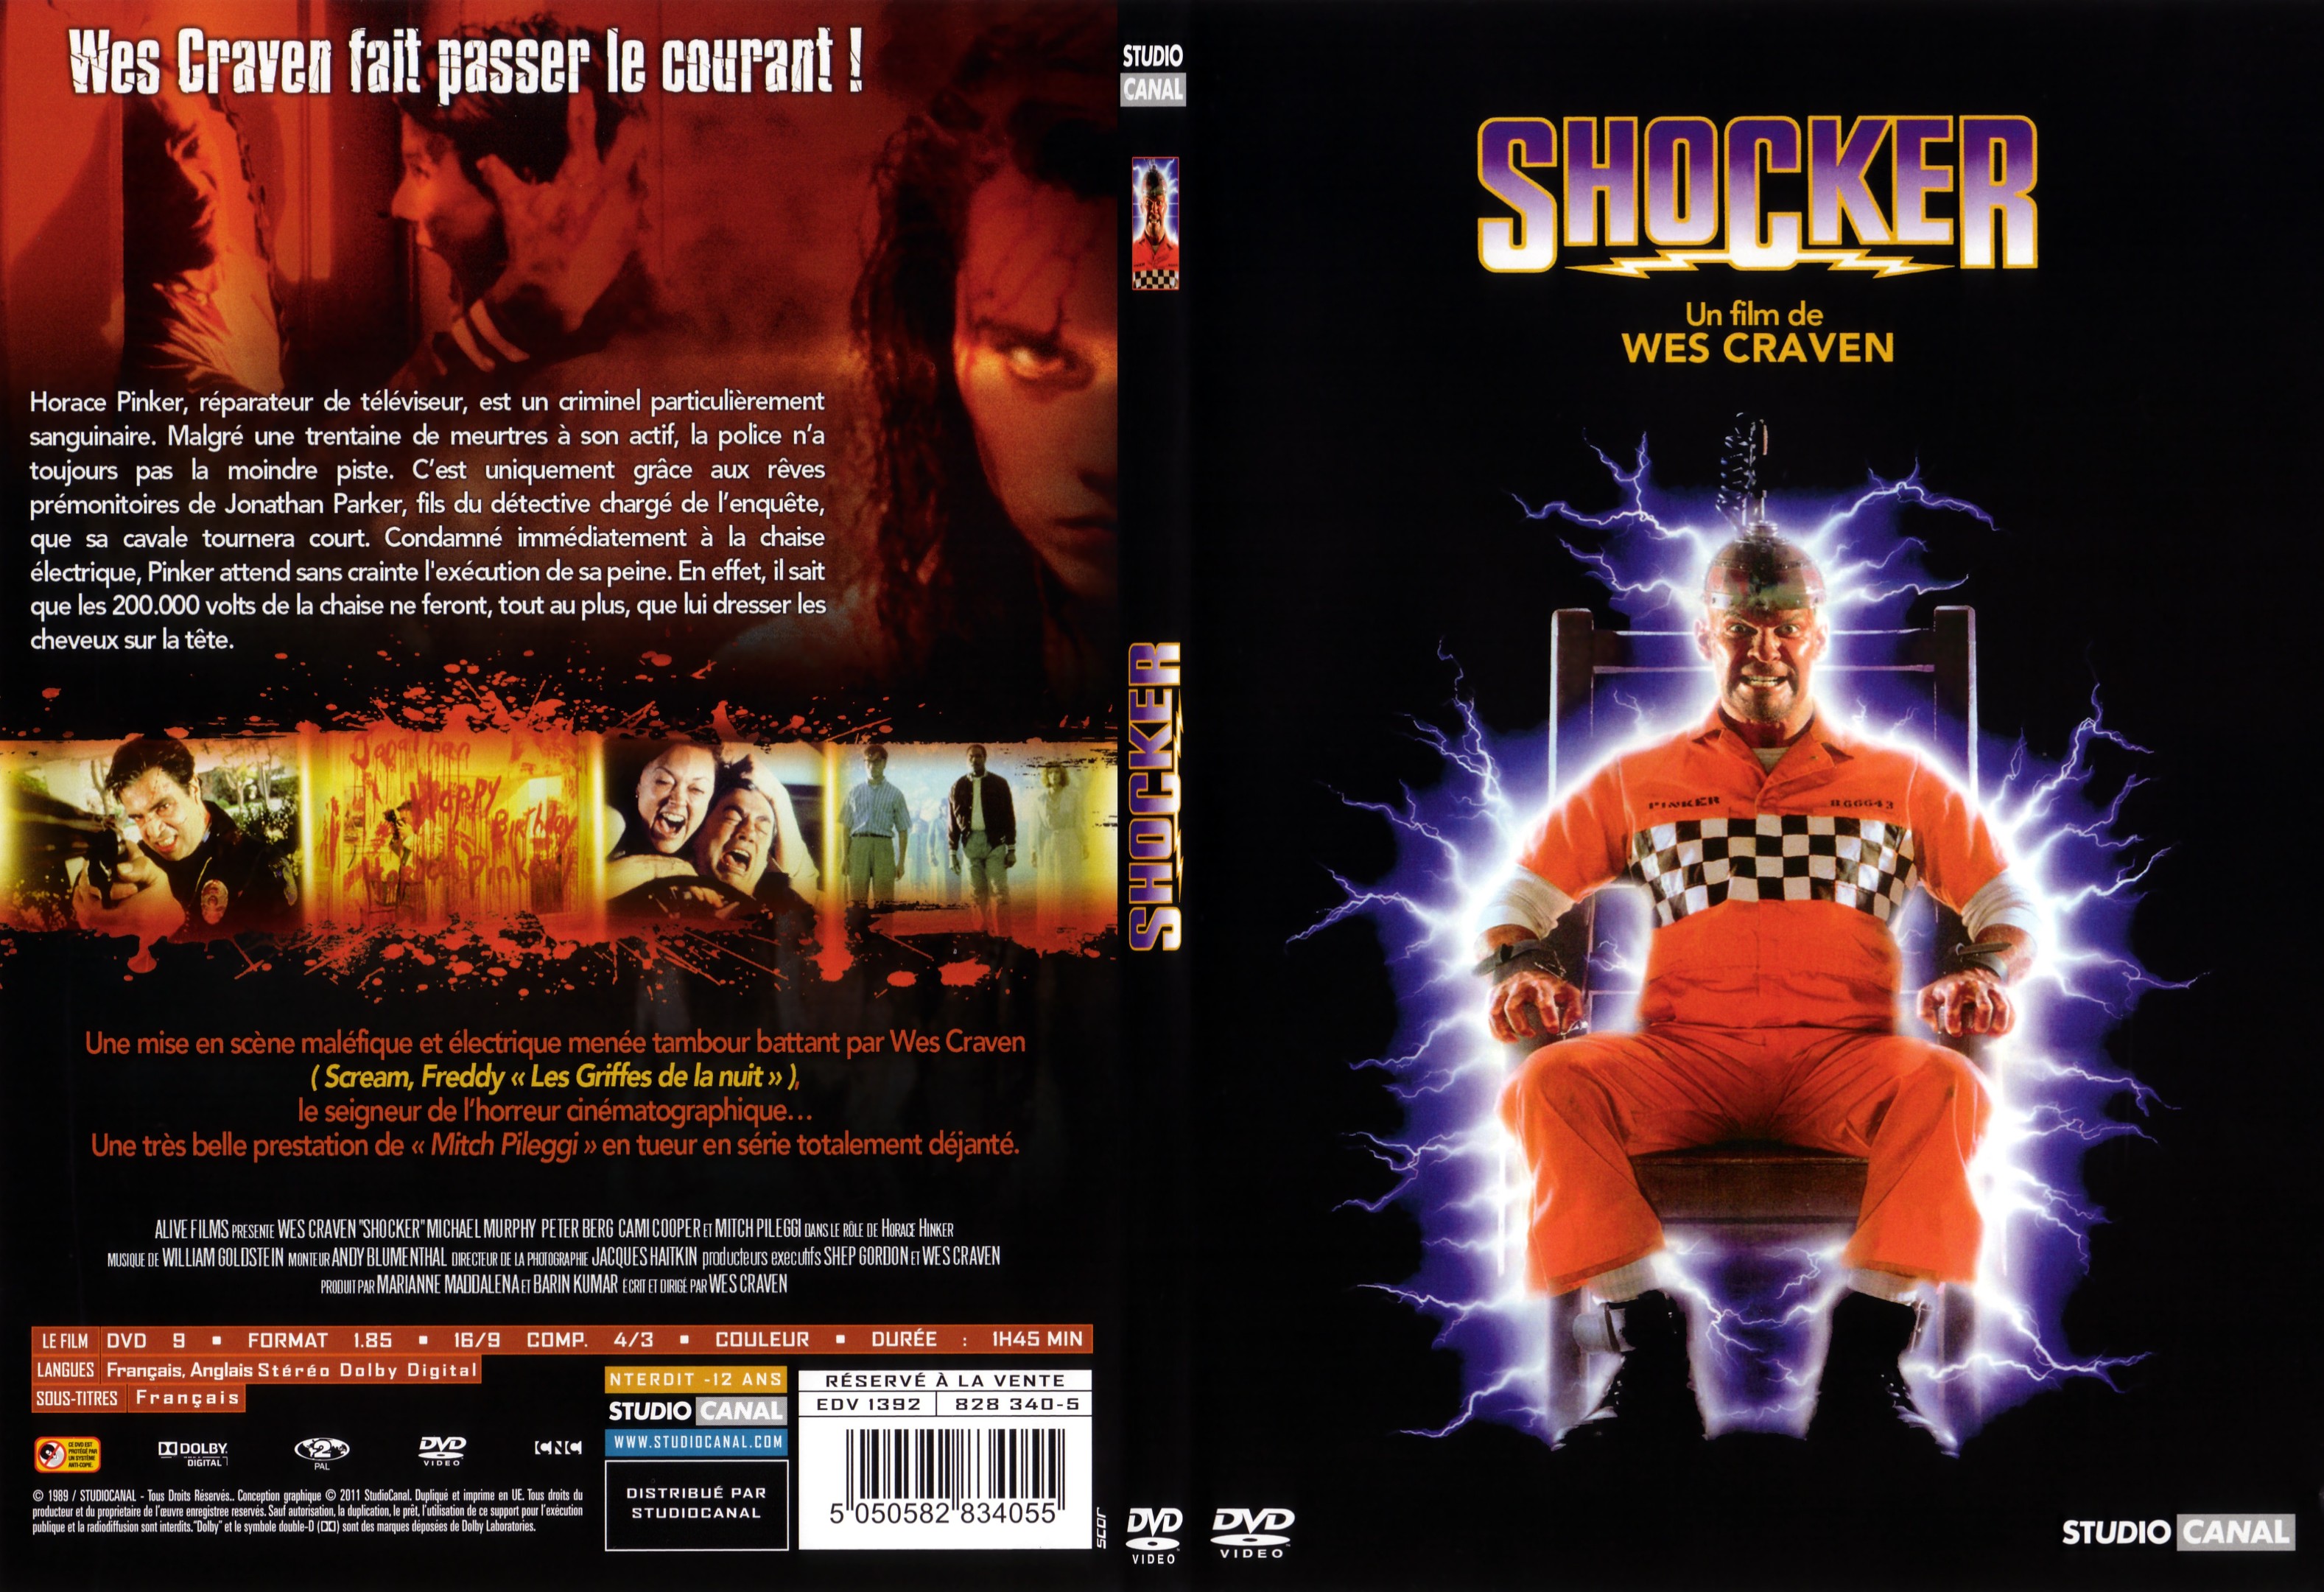 Jaquette DVD Shocker - SLIM